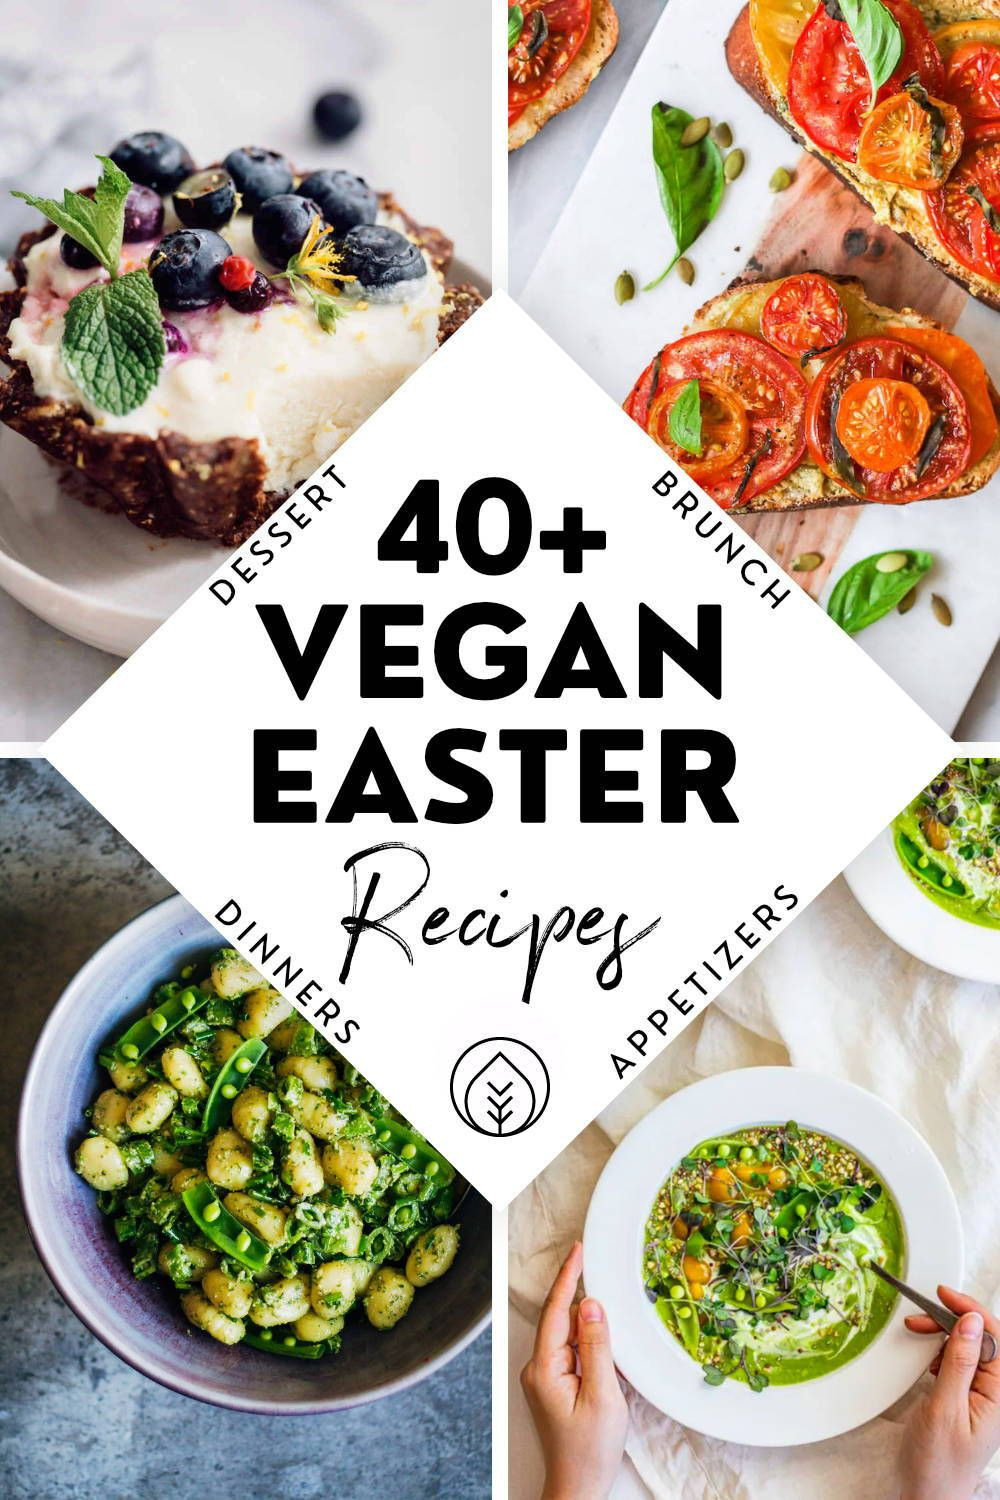 Vegetarian Recipes For Easter
 49 Healthy Vegan Easter Recipes Breakfast to Dinner